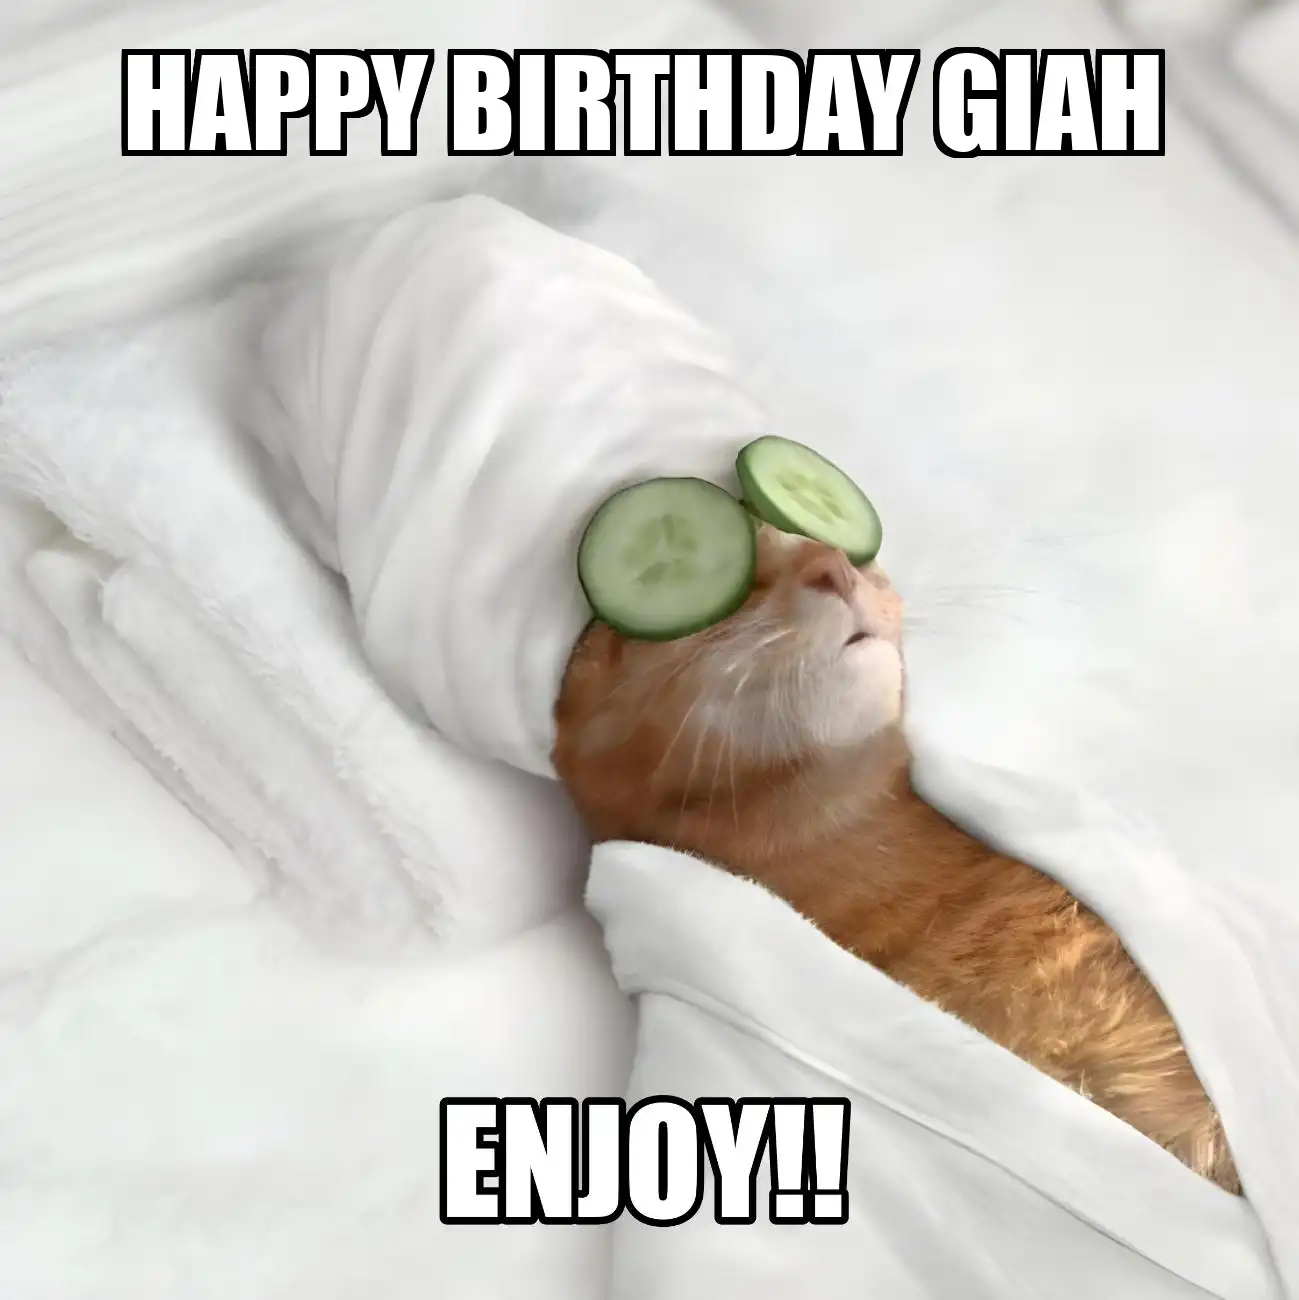 Happy Birthday Giah Enjoy Cat Meme